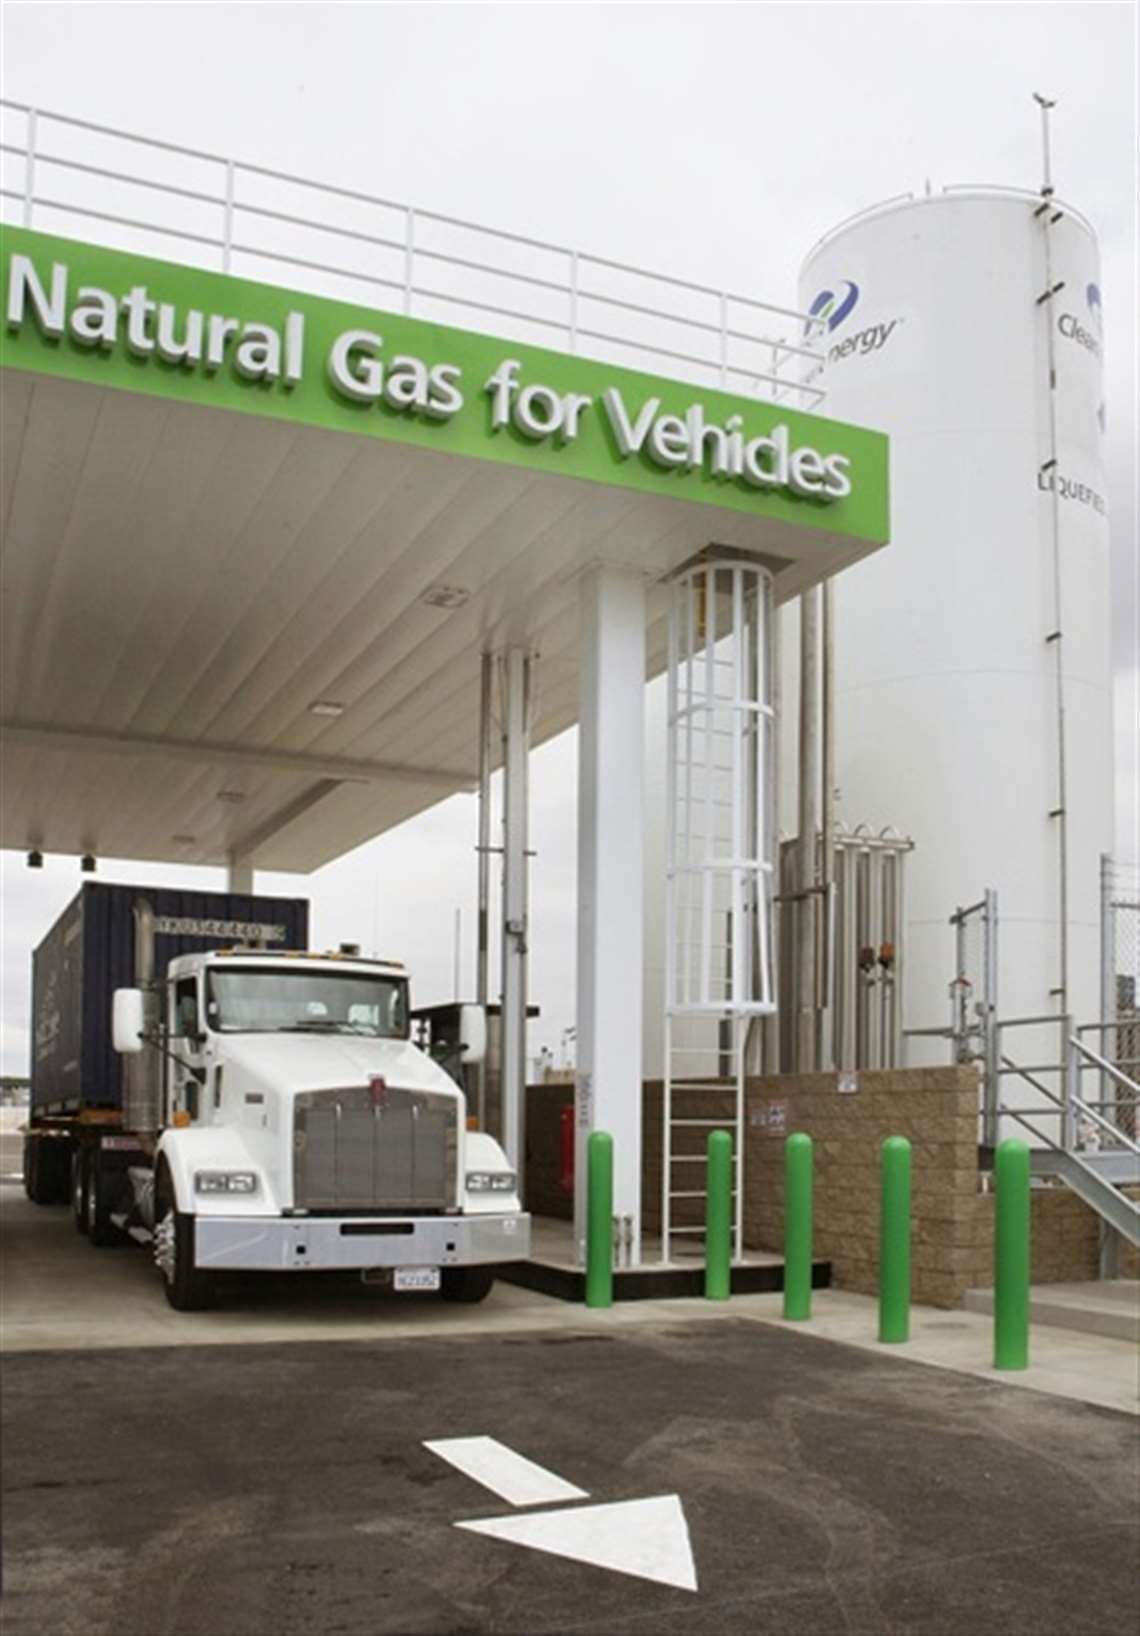 Natural gas truck